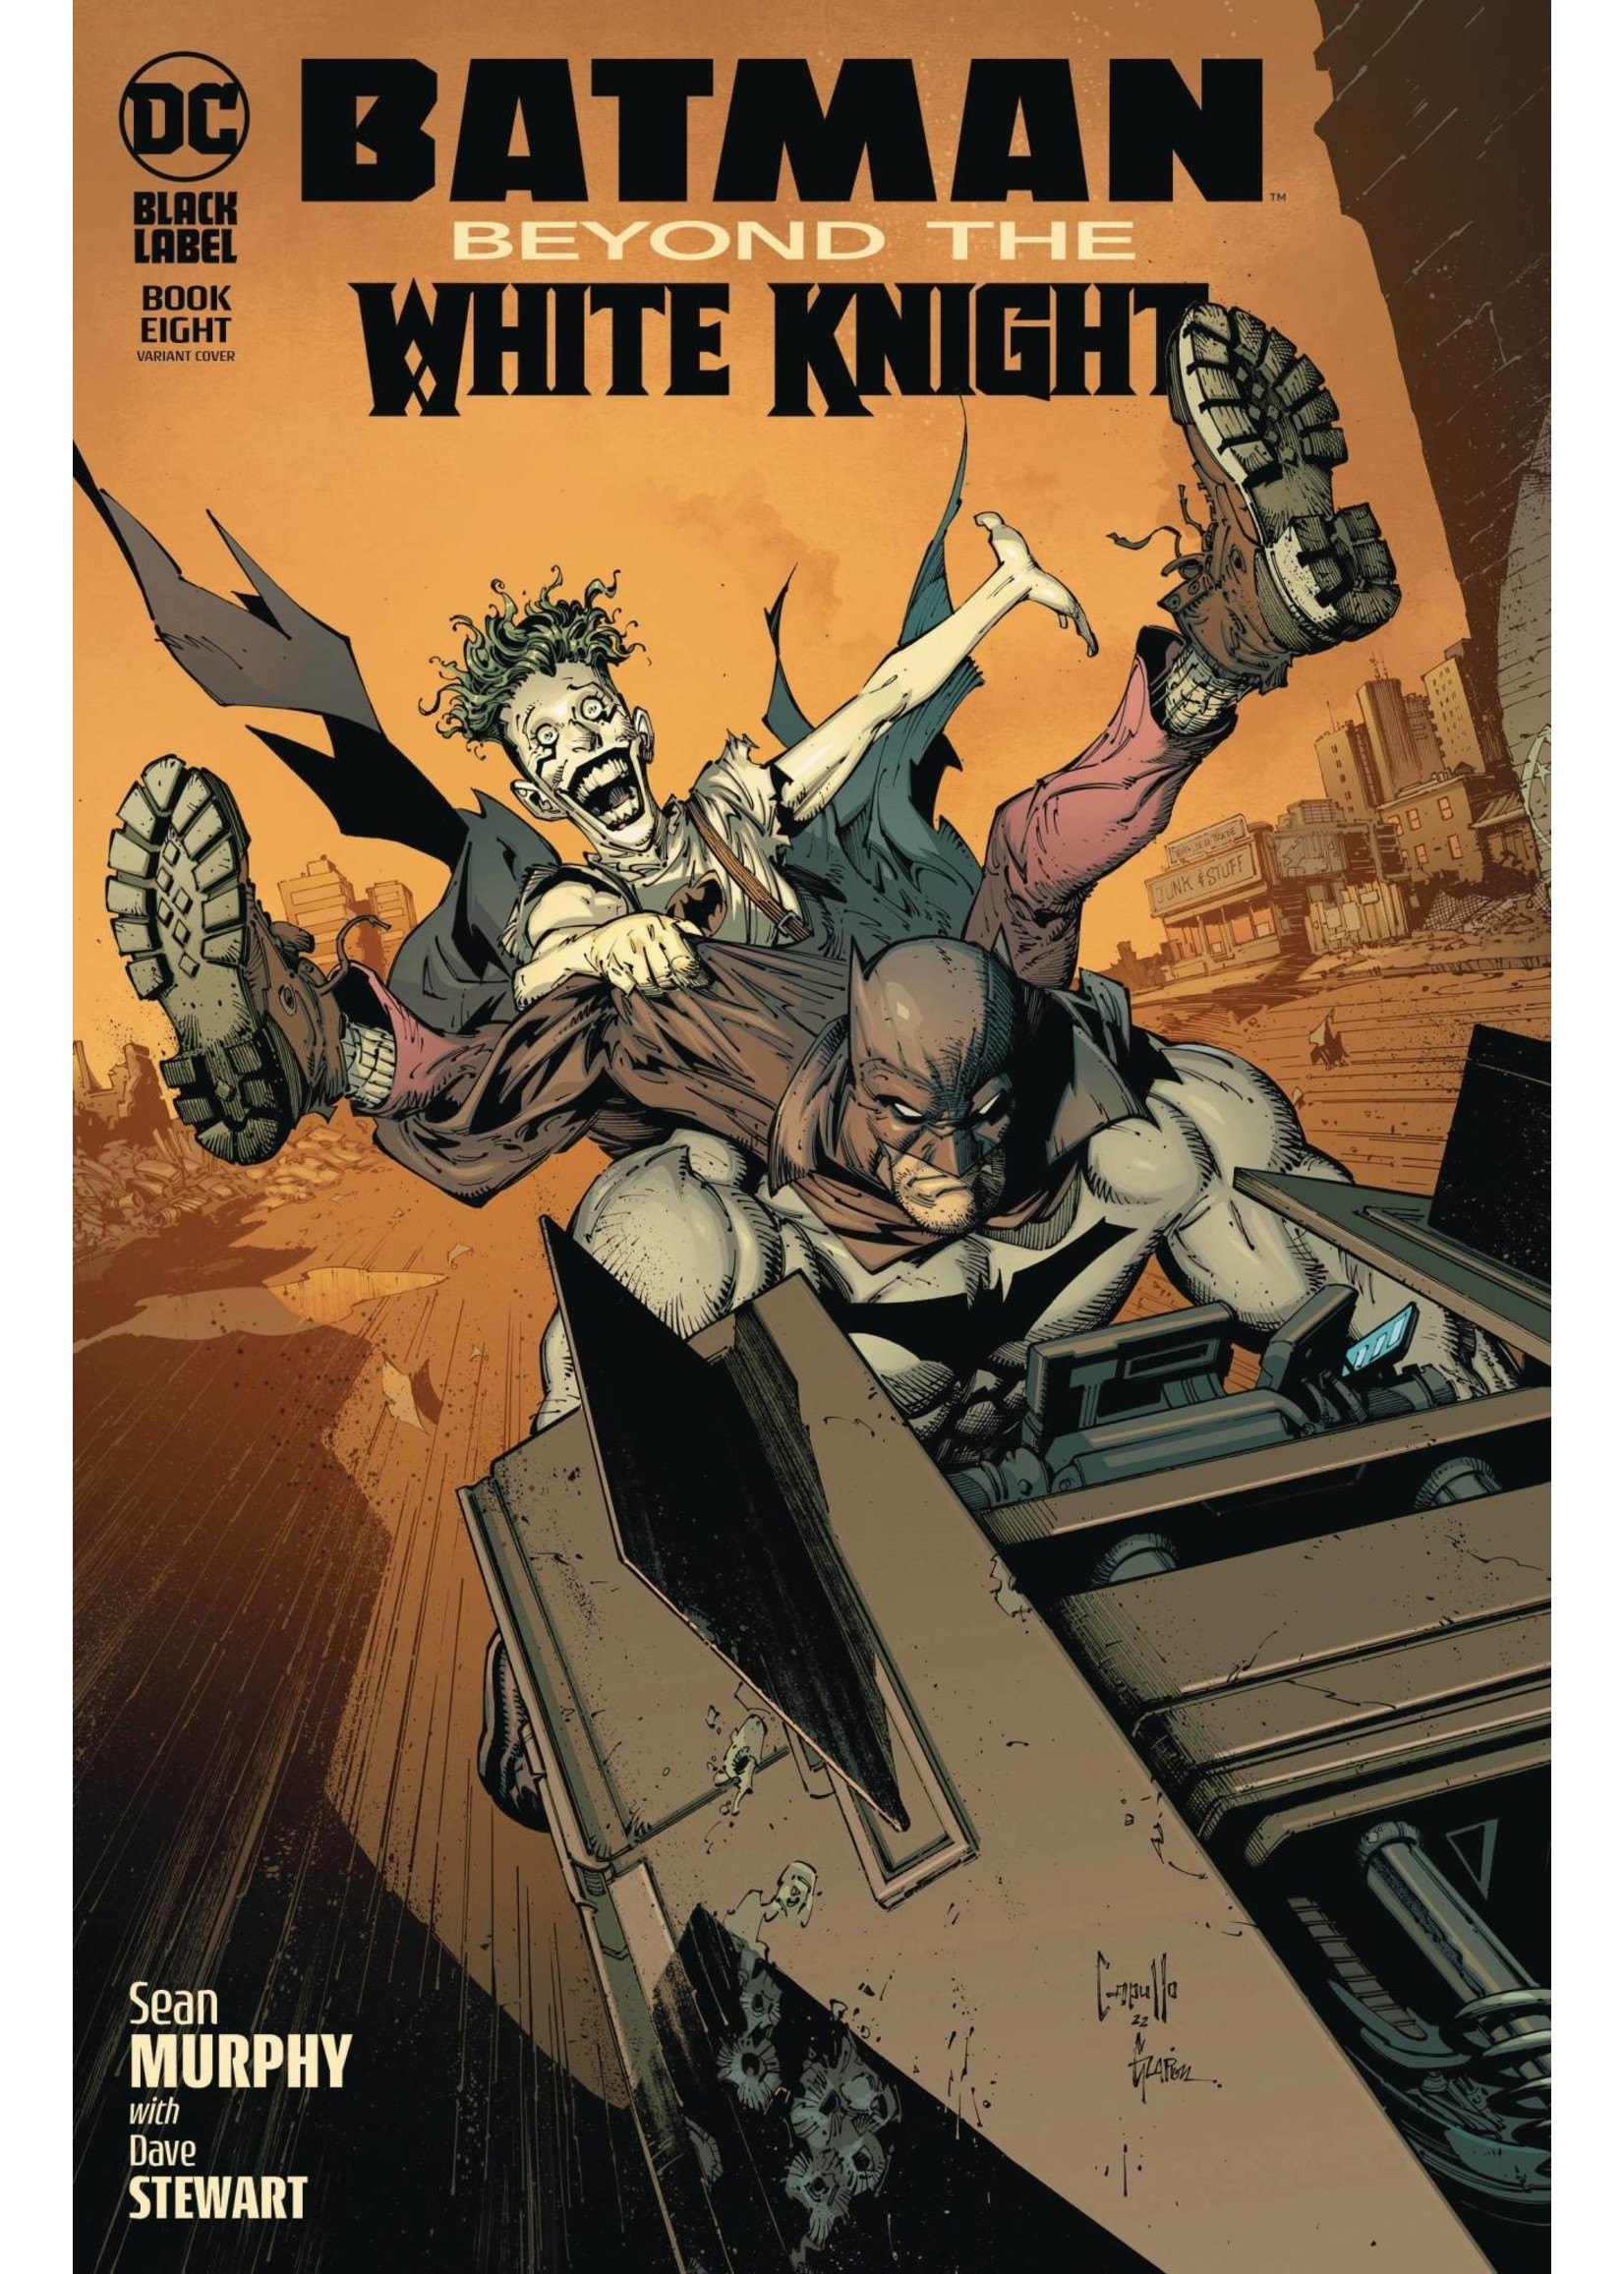 DC COMICS BATMAN BEYOND THE WHITE KNIGHT #8 CAPULLO - Rolling Tales